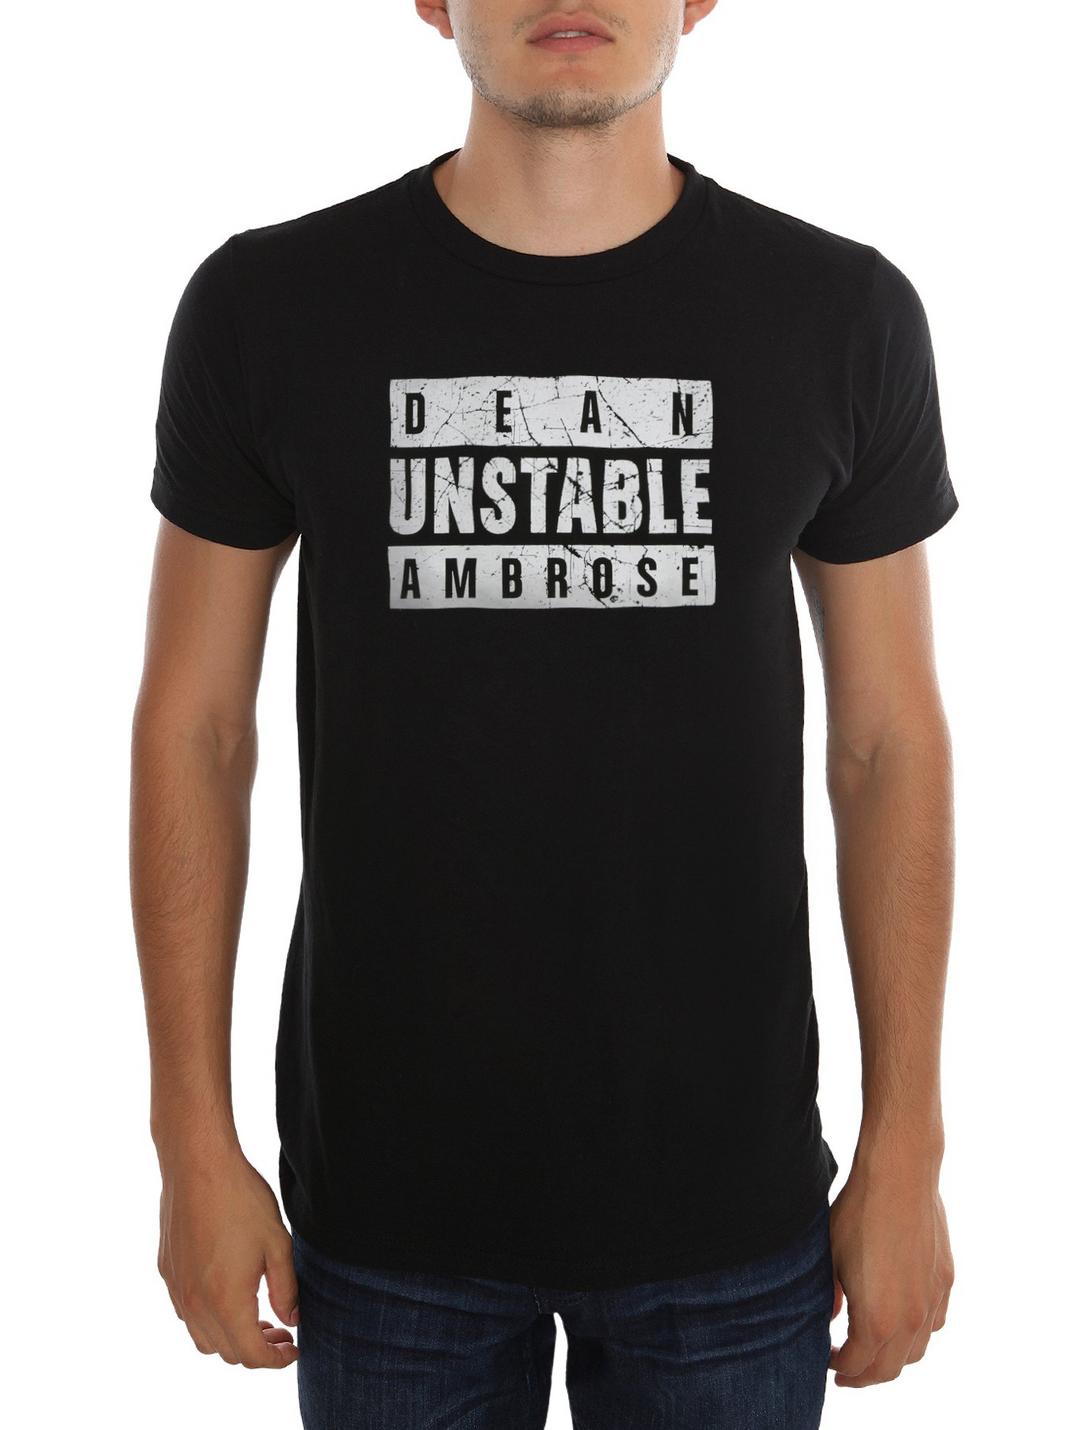 WWE Dean Ambrose Unstable Ambrose T-Shirt, BLACK, hi-res